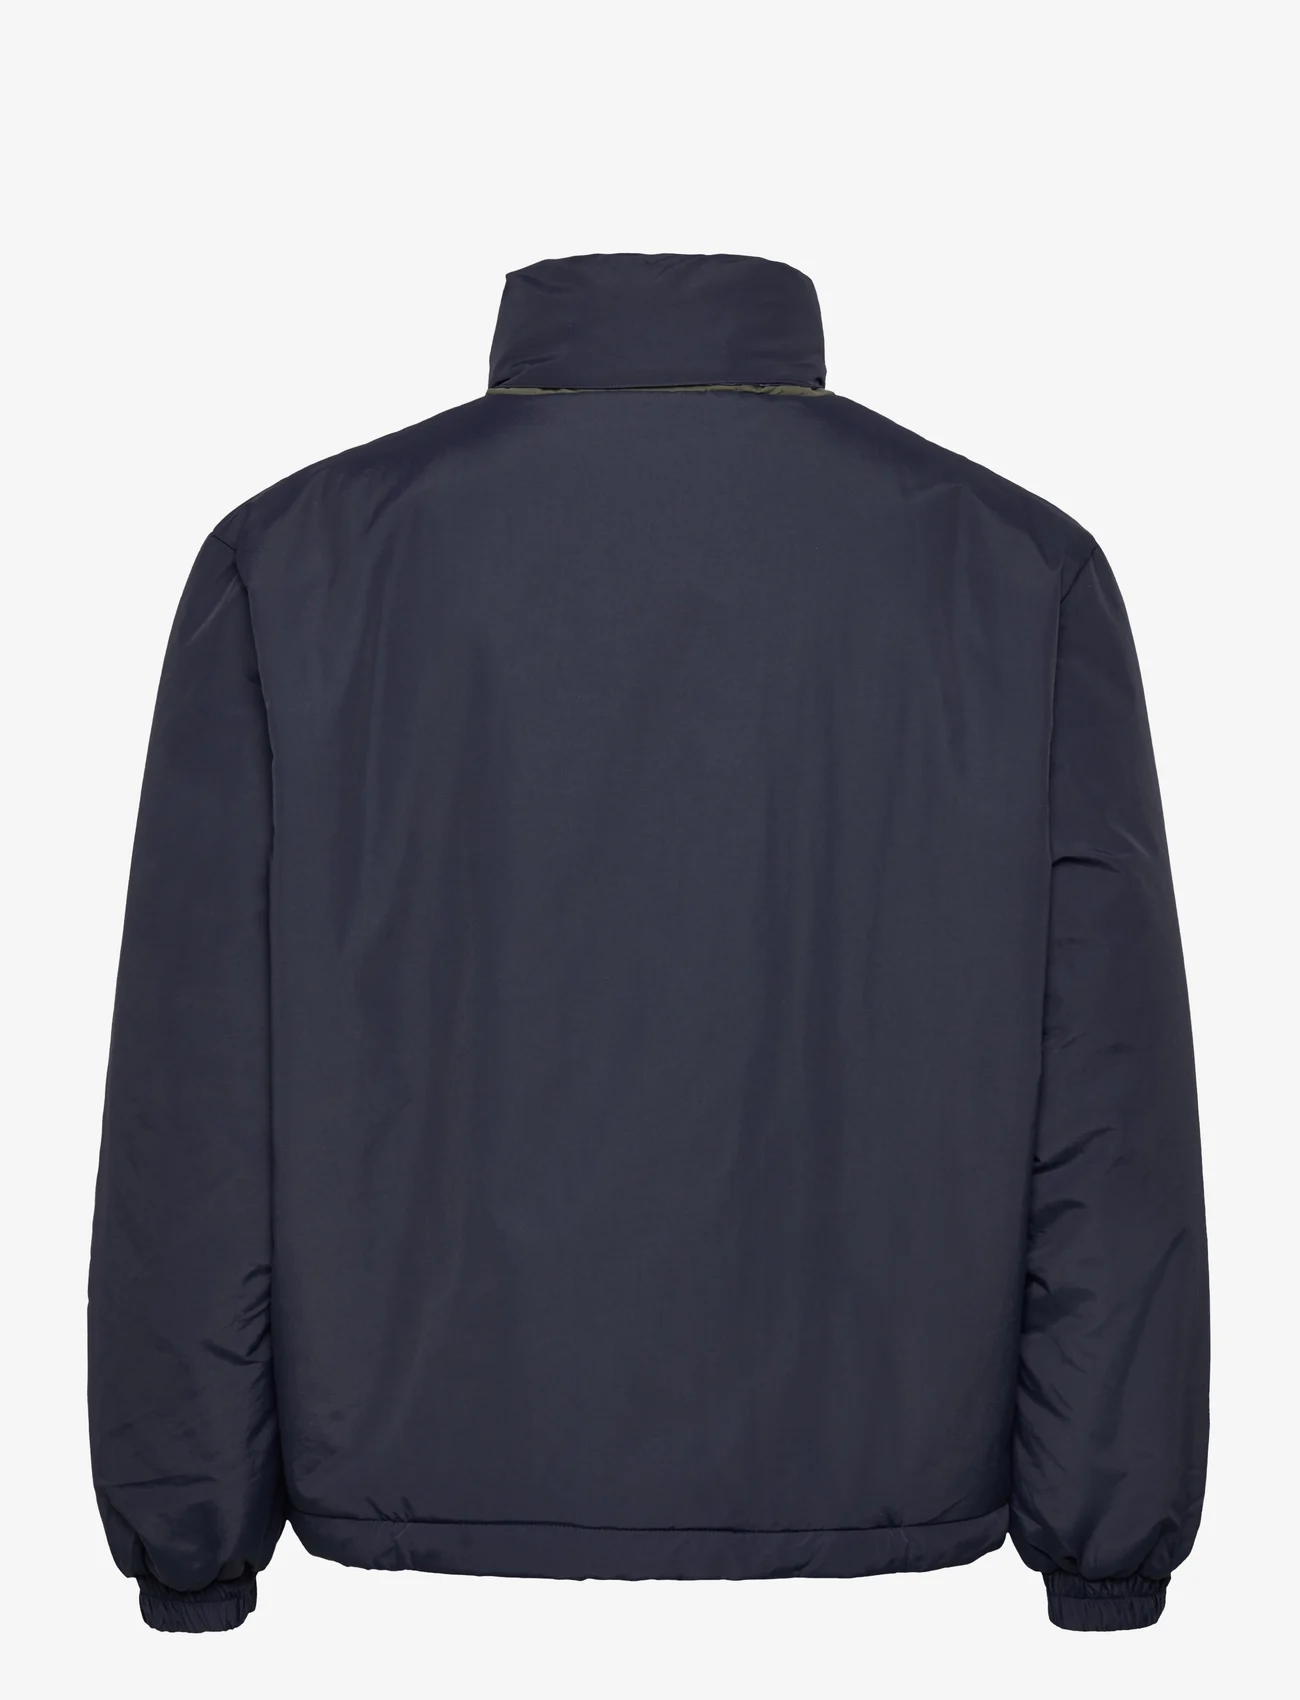 Soulland - Jim jacket - talvitakit - navy - 1